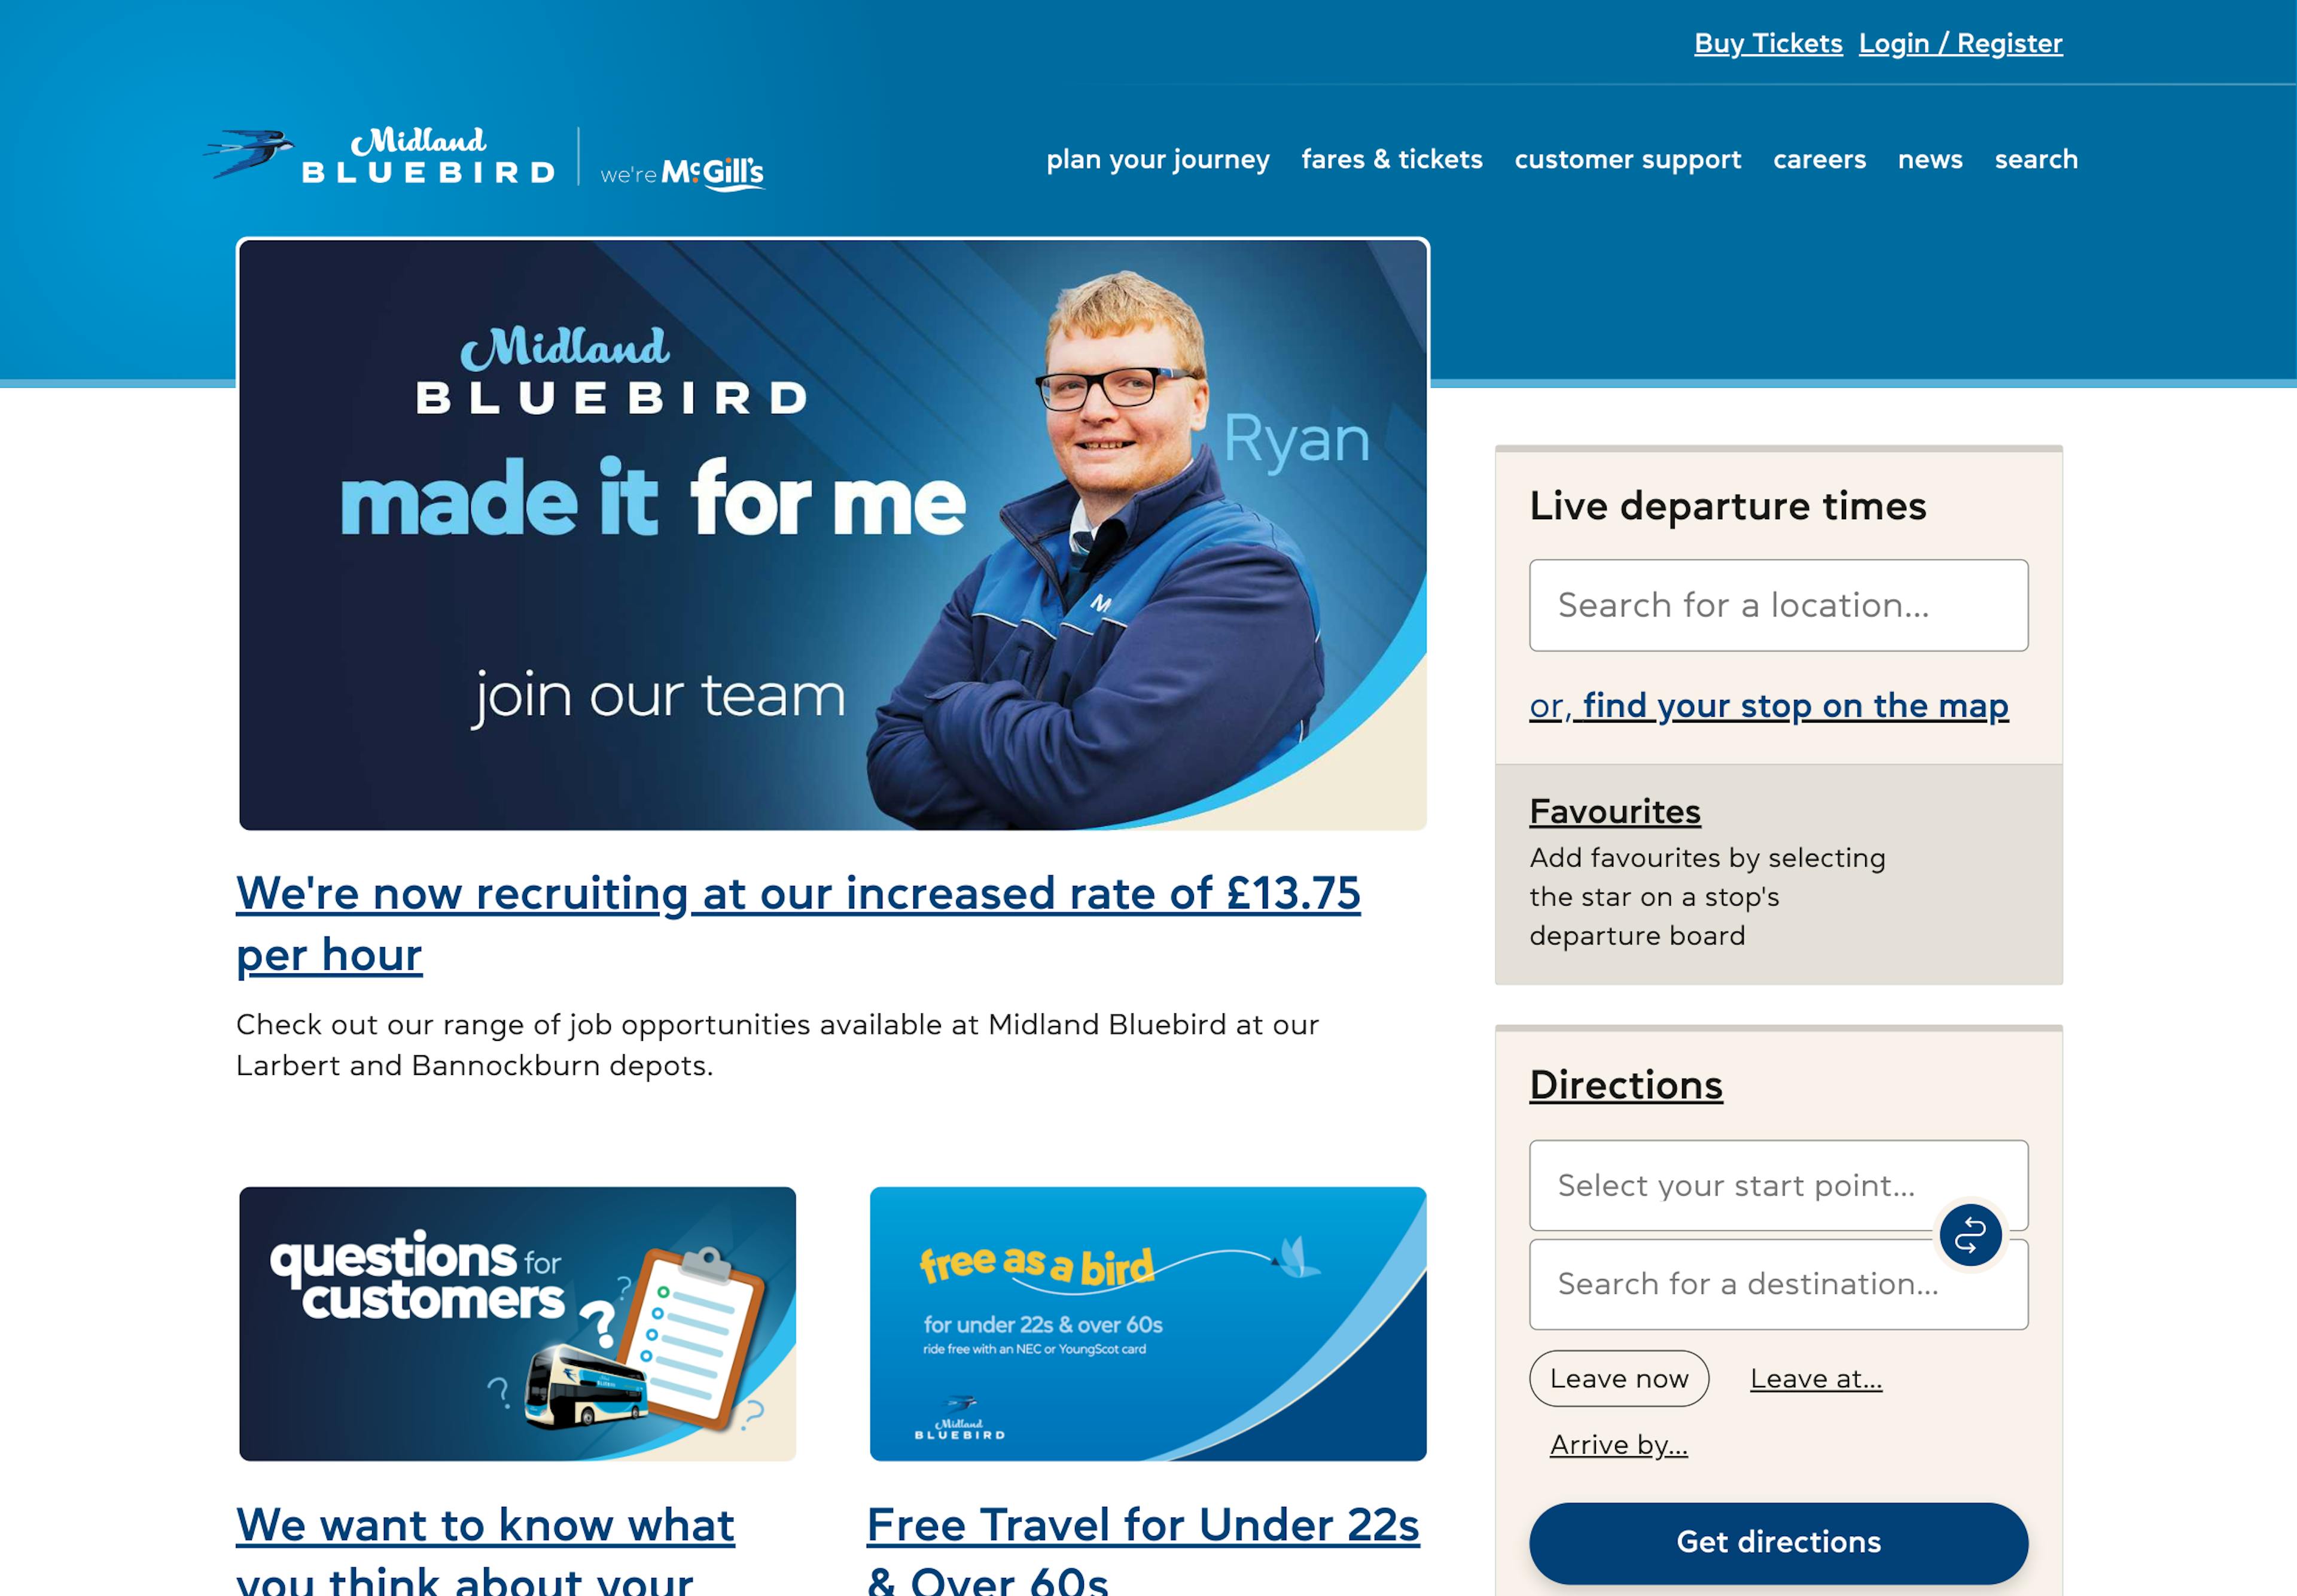 A screenshot of the Midland Bluebird homepage